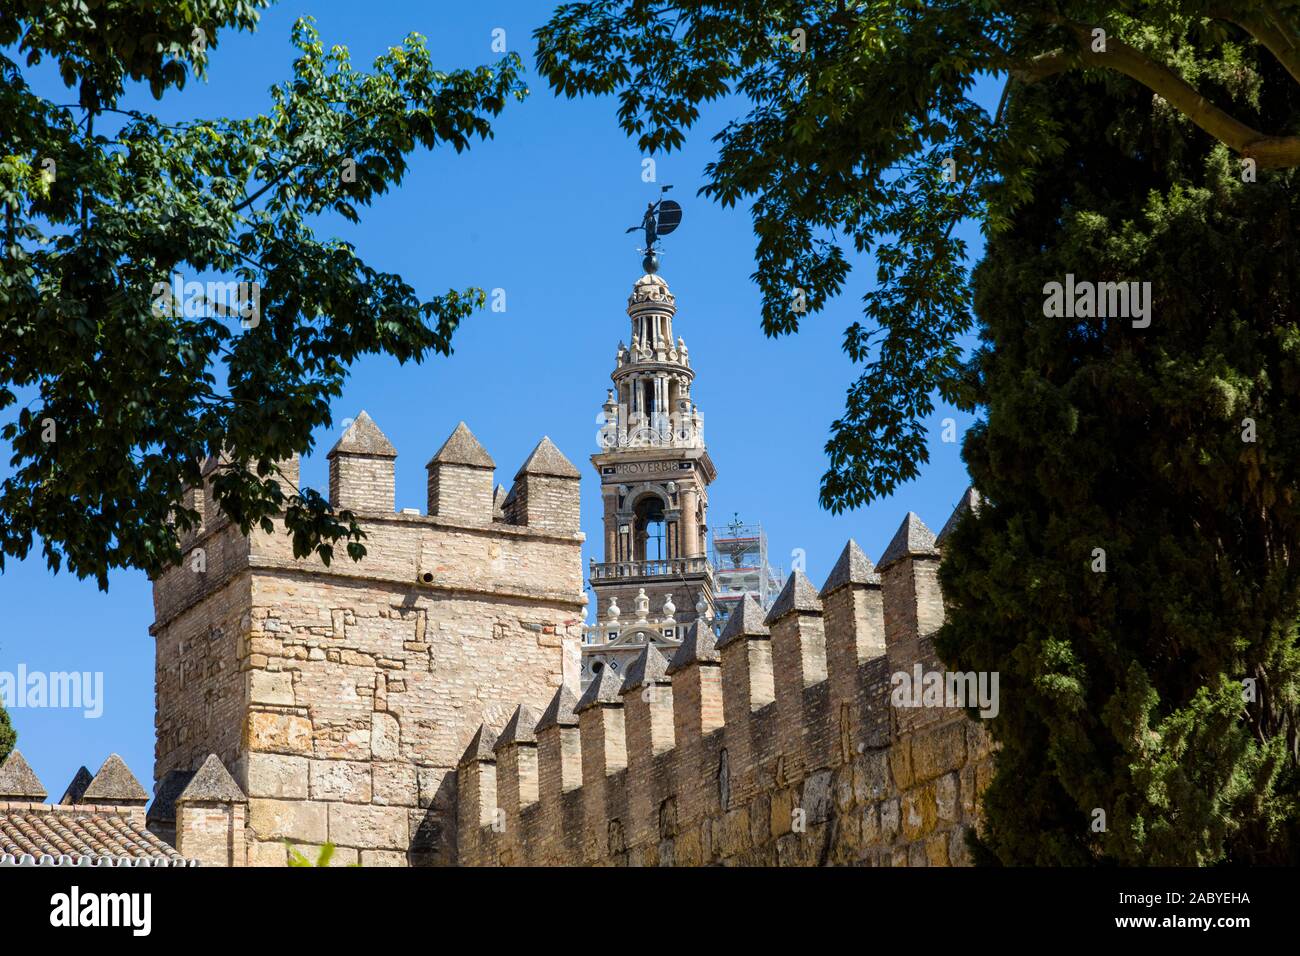 Real Alcazar De Sevilla, der königliche Alcázar von Sevilla ist ein königlicher Palast in Sevilla Andalusien Spanien Stockfoto